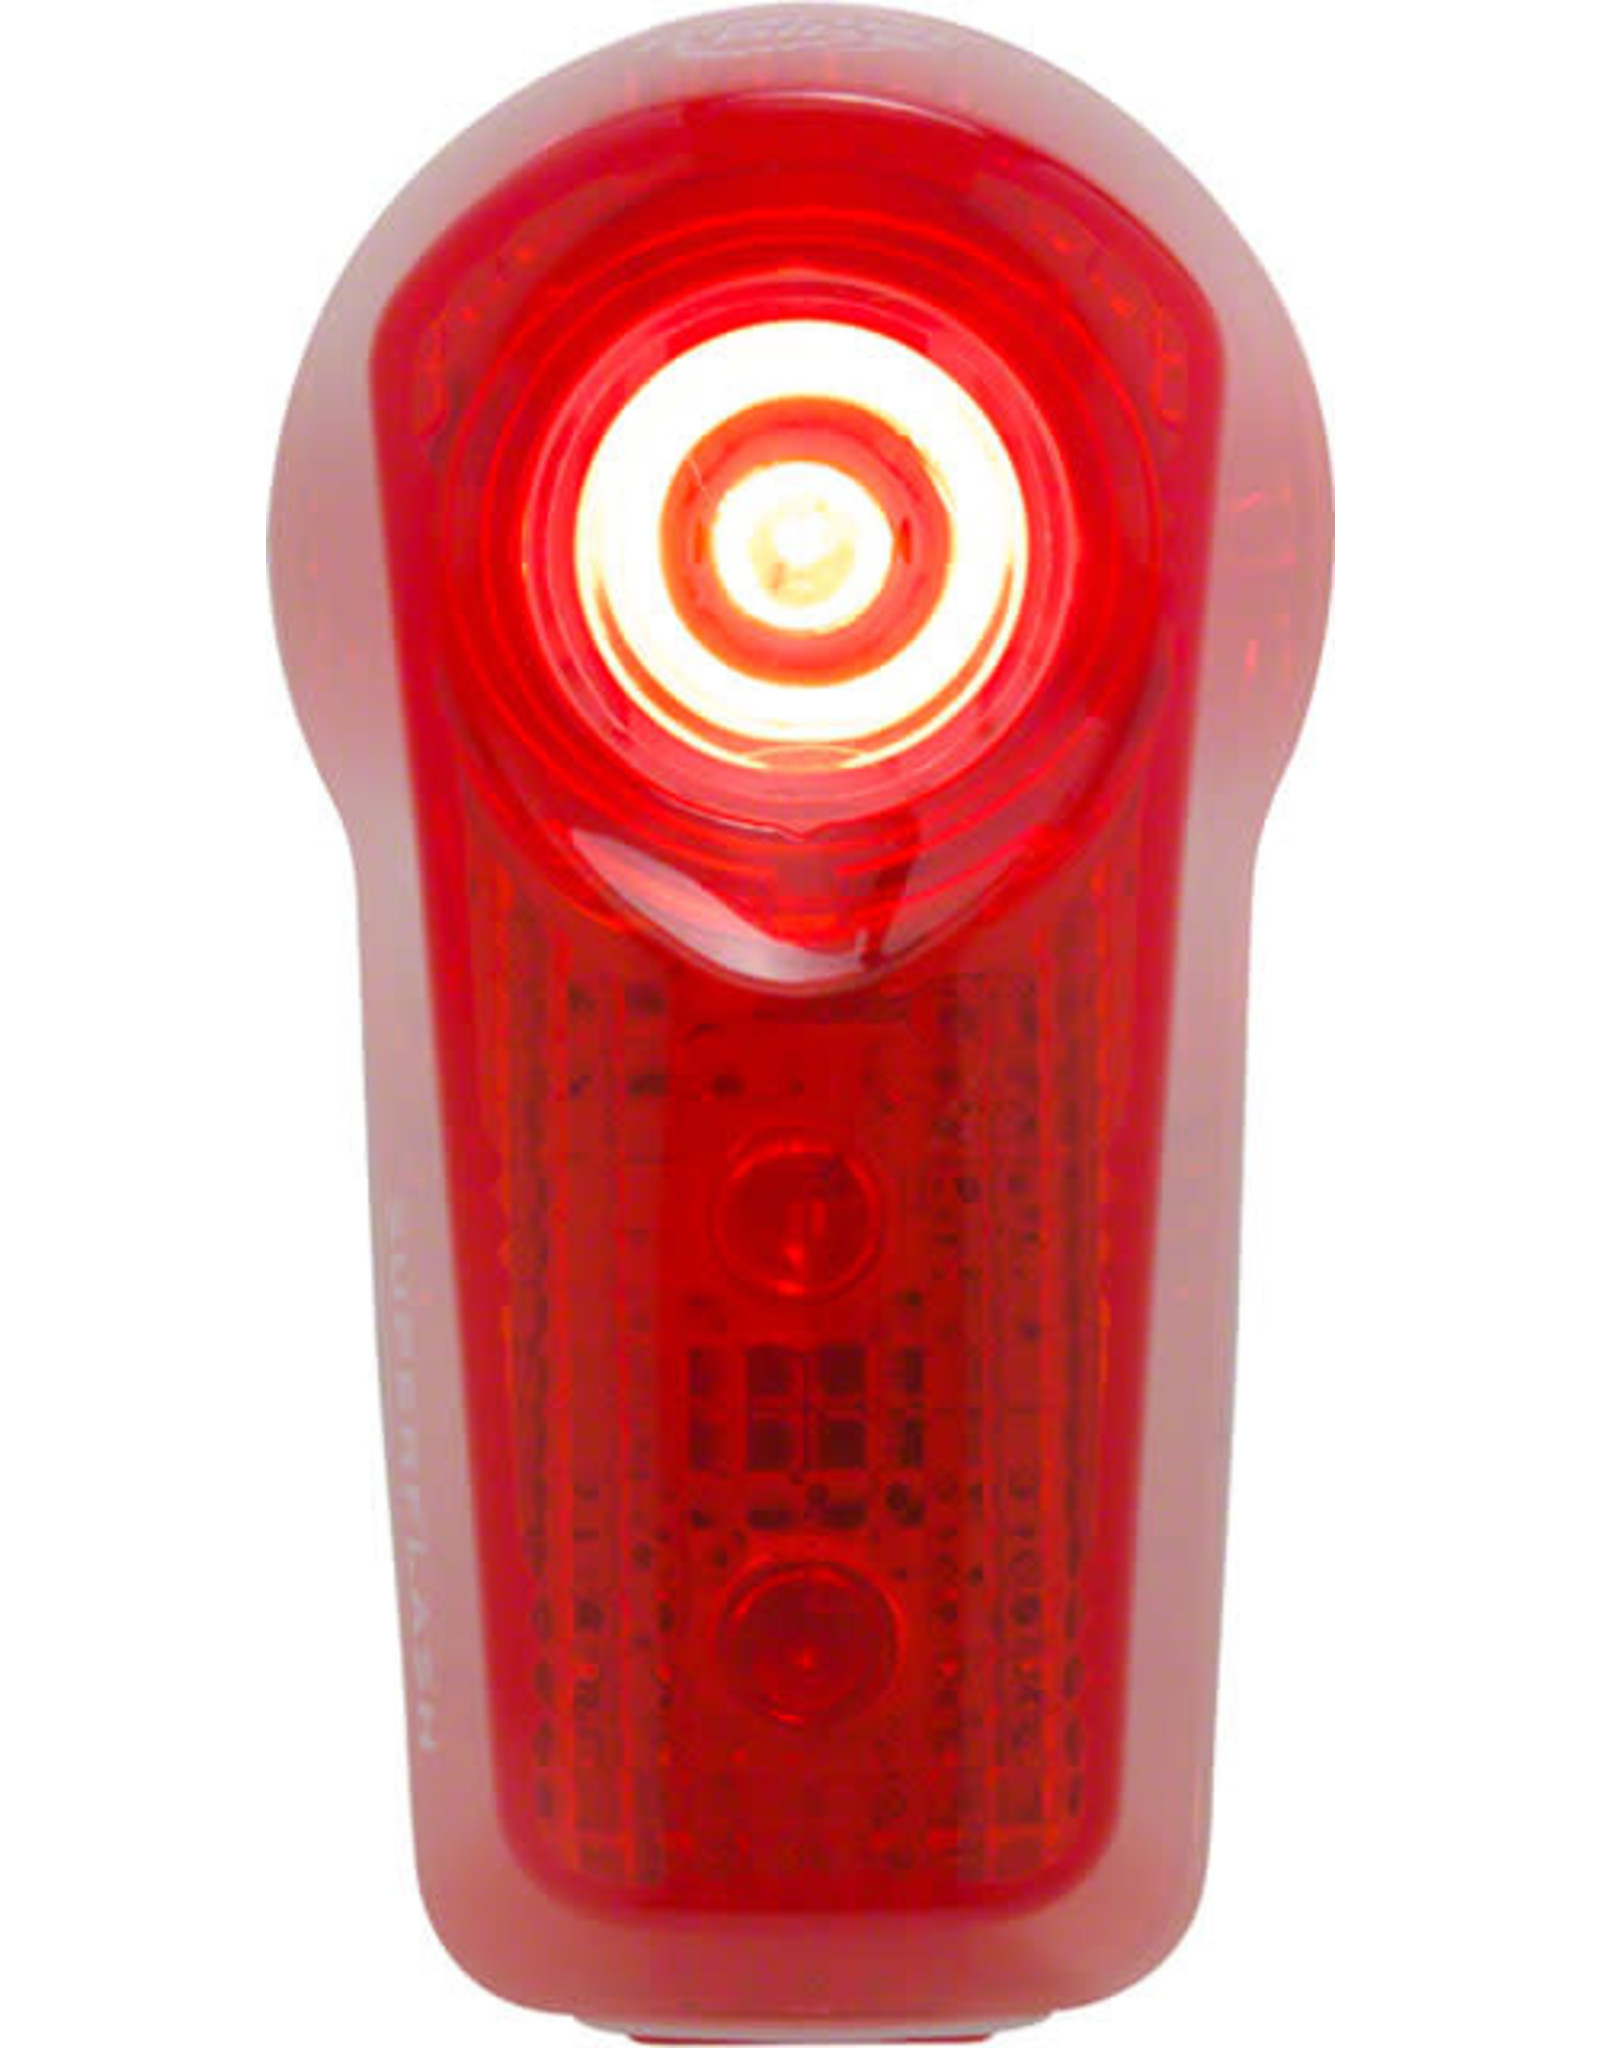 Planet Bike LED Superflash Taillight - Red/White